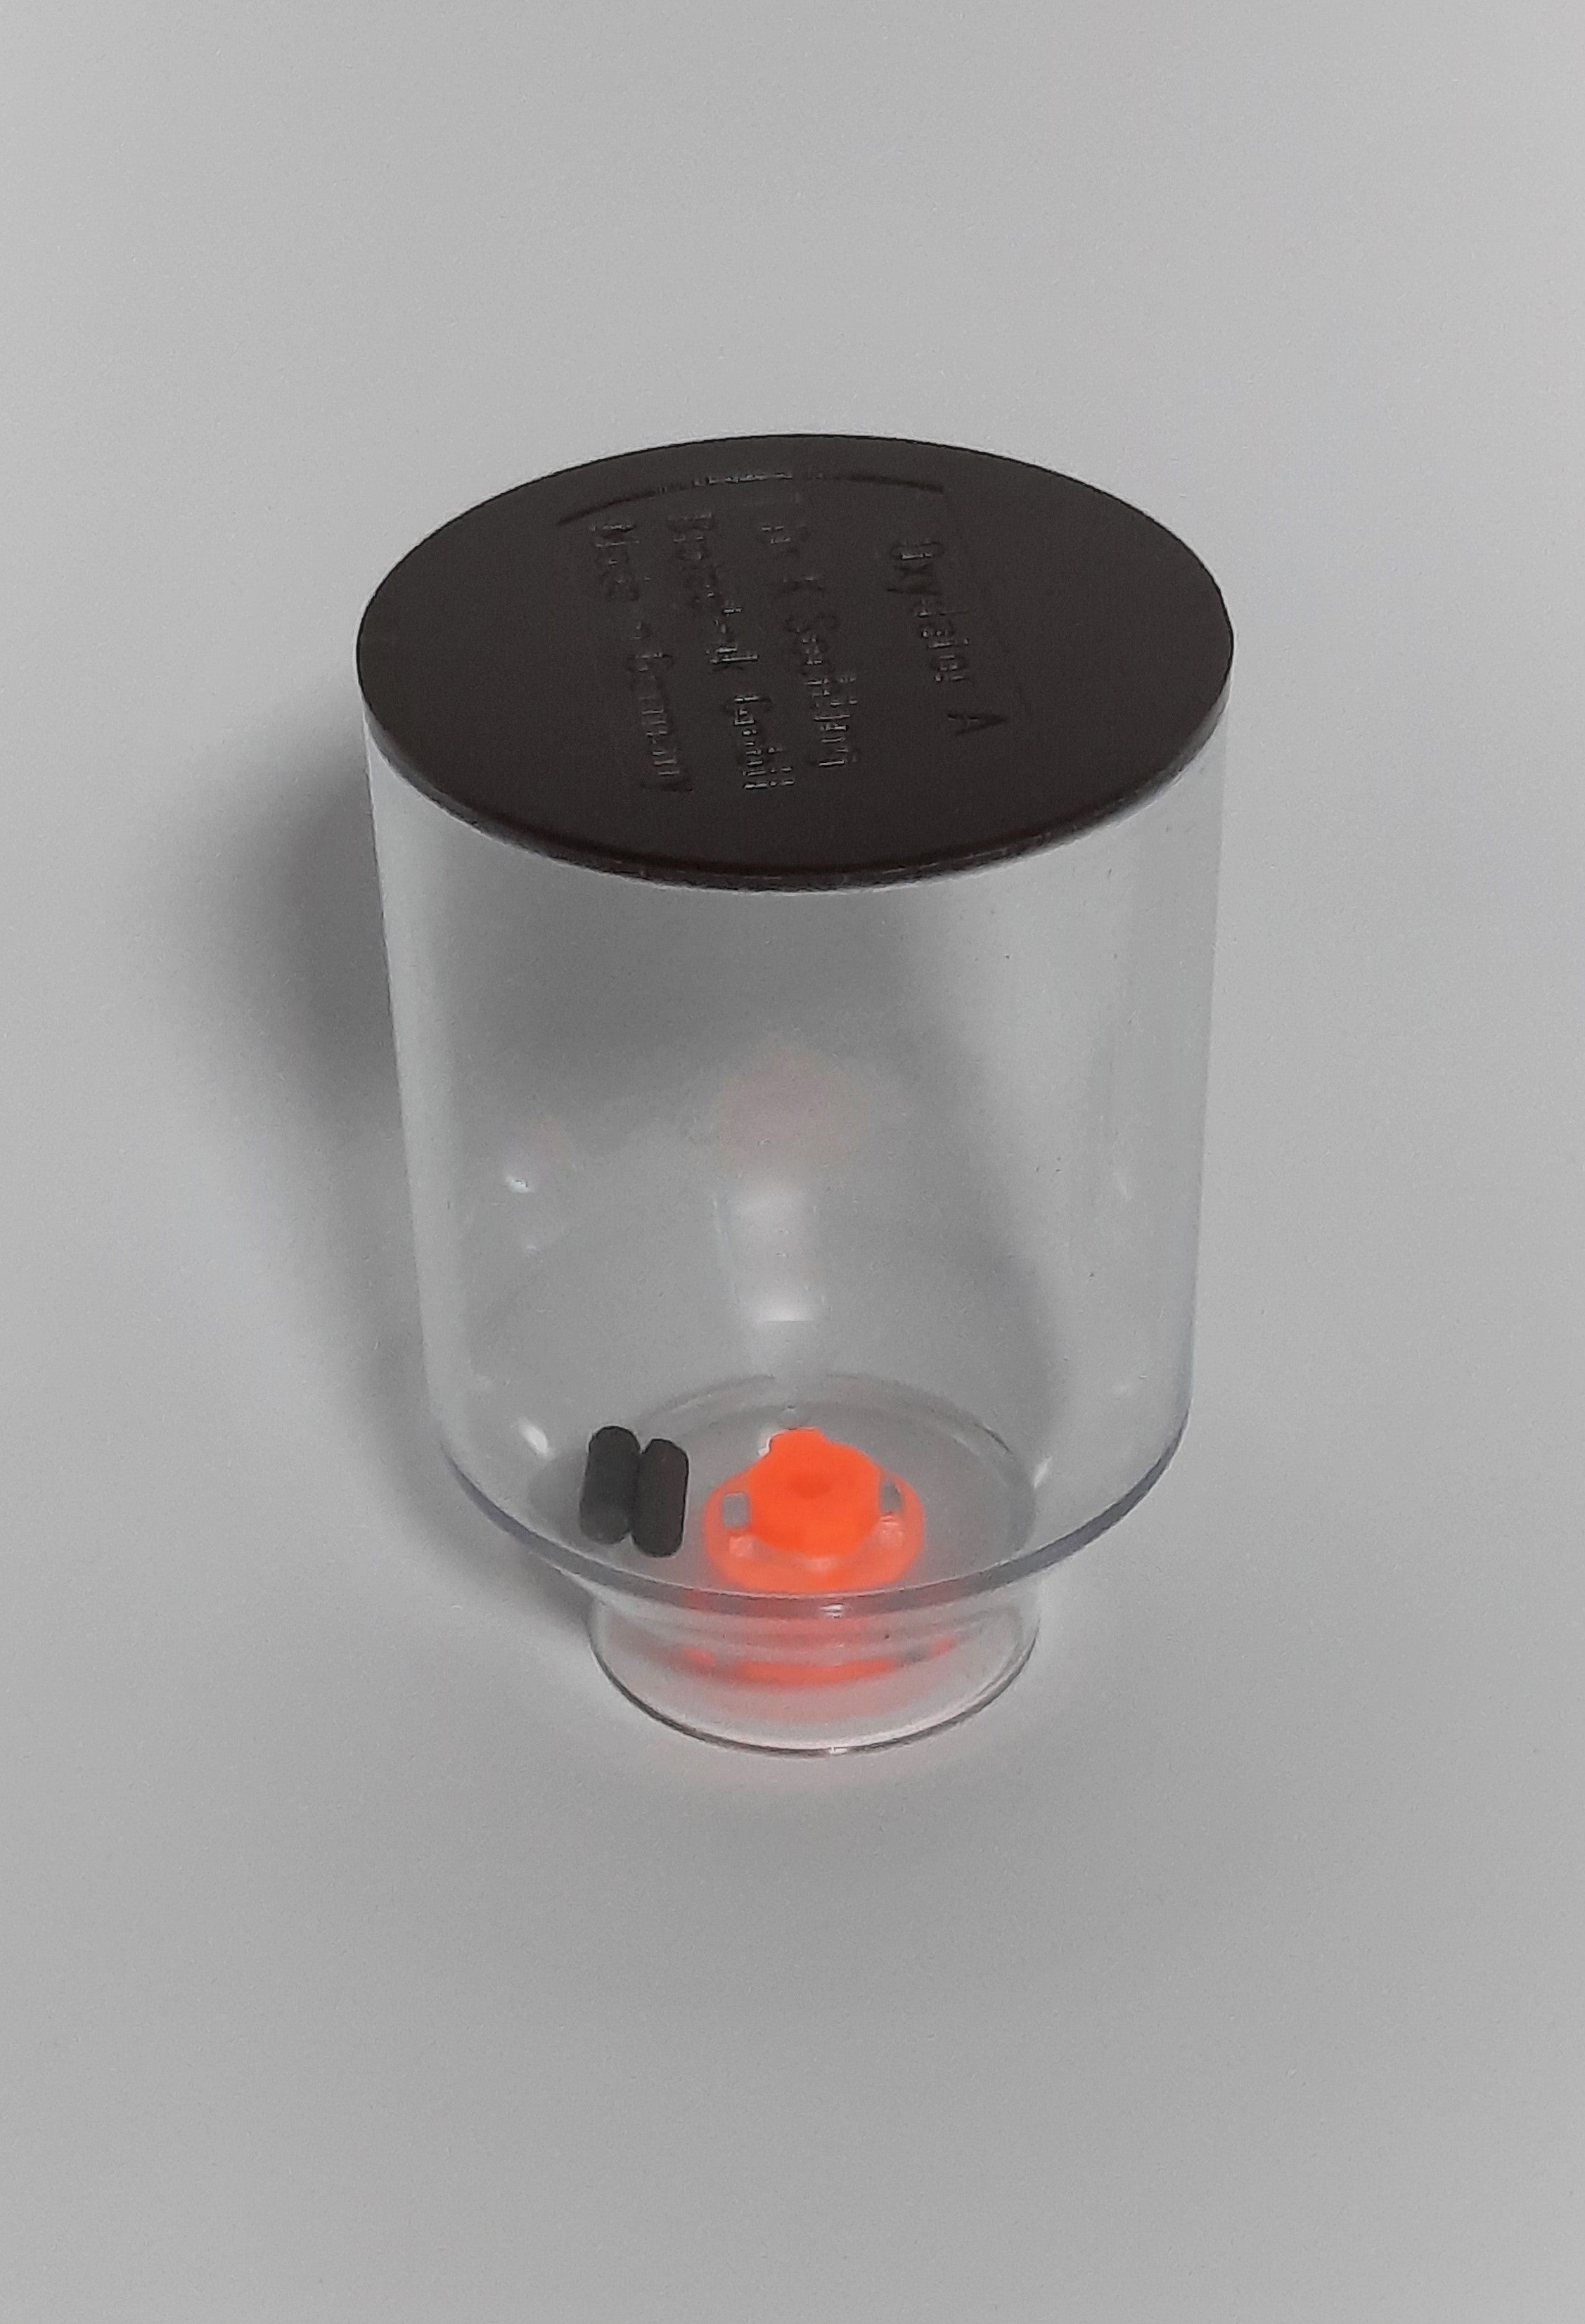 Söchting Oxydator A Acrylglas-Behälter